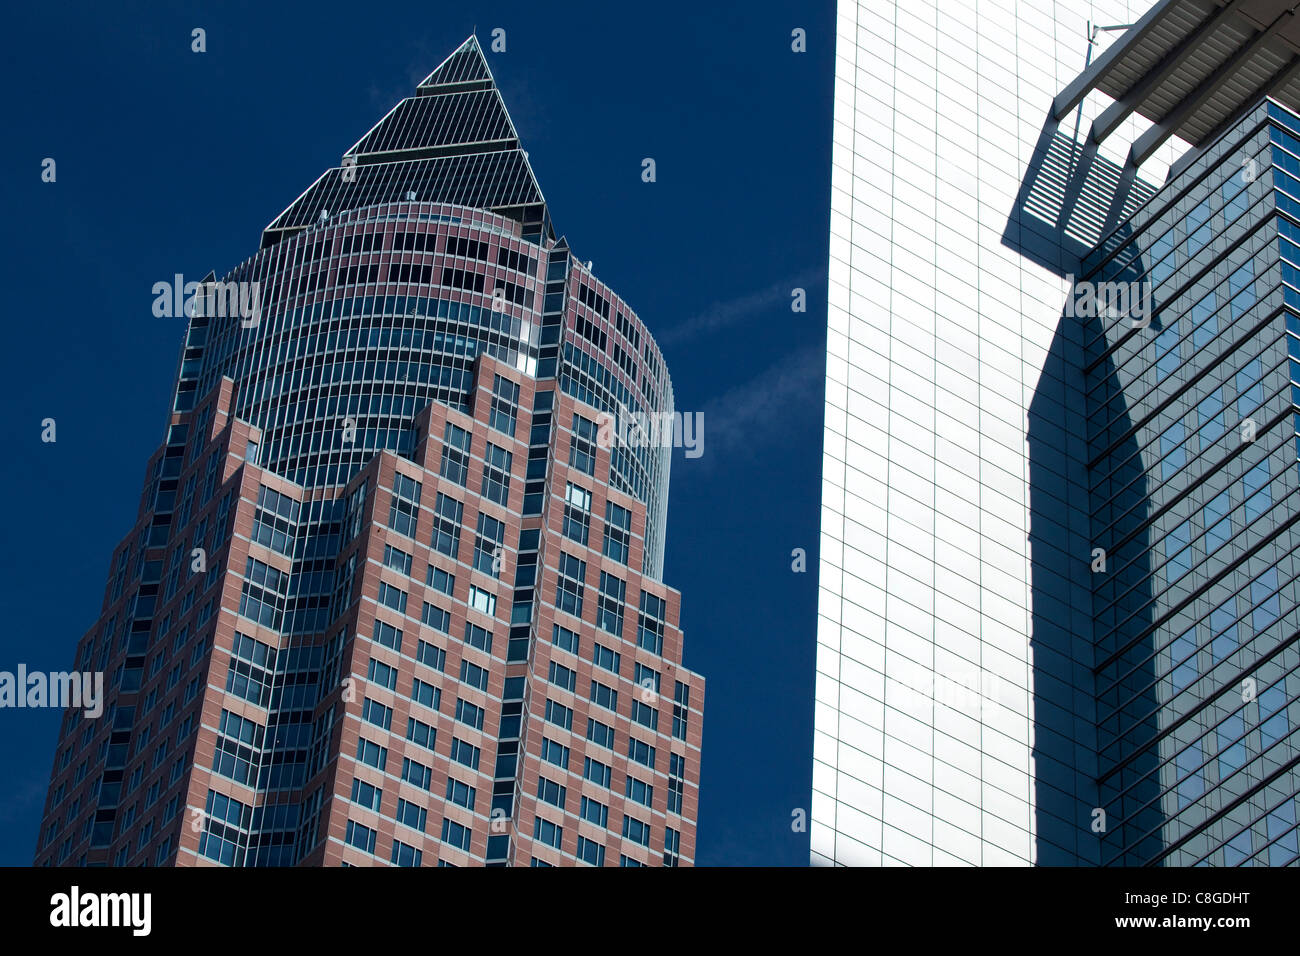 The Messeturm, the skyscraper symbol of the Fair Trade Area in Frankfurt am Main, Hesse, Germany Stock Photo